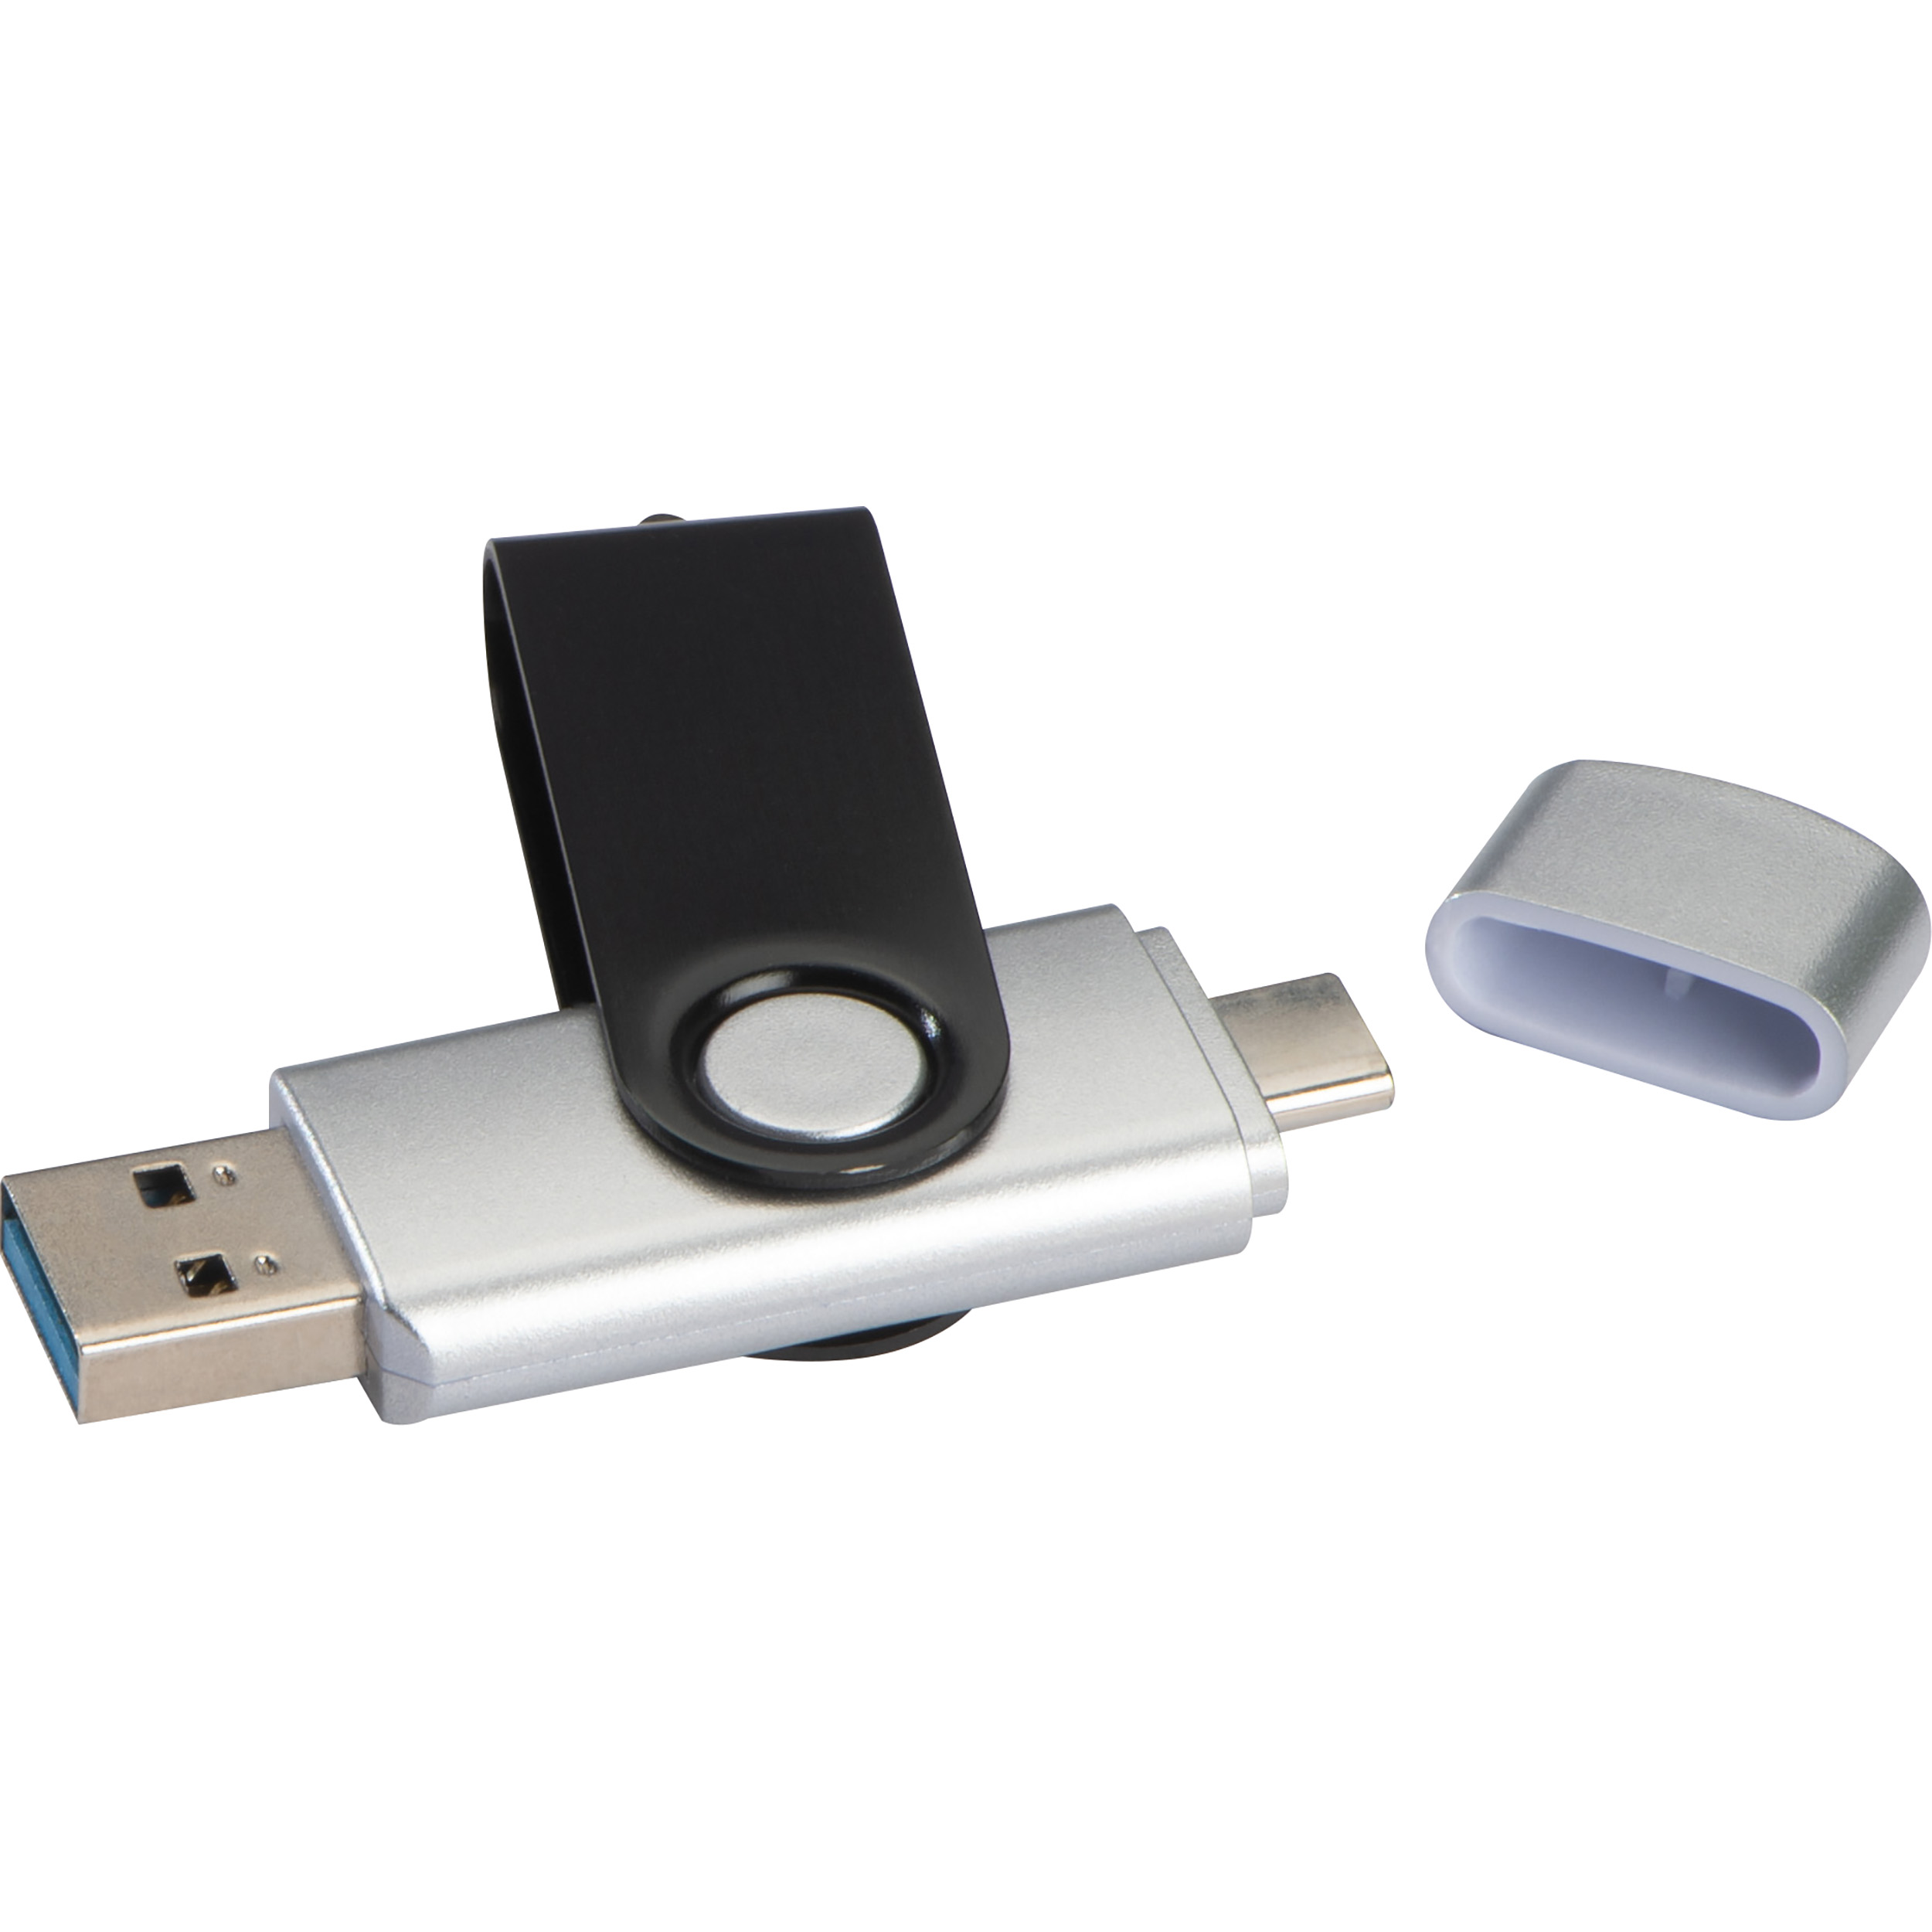 UniClip USB - Nether Stowey - Greenwich